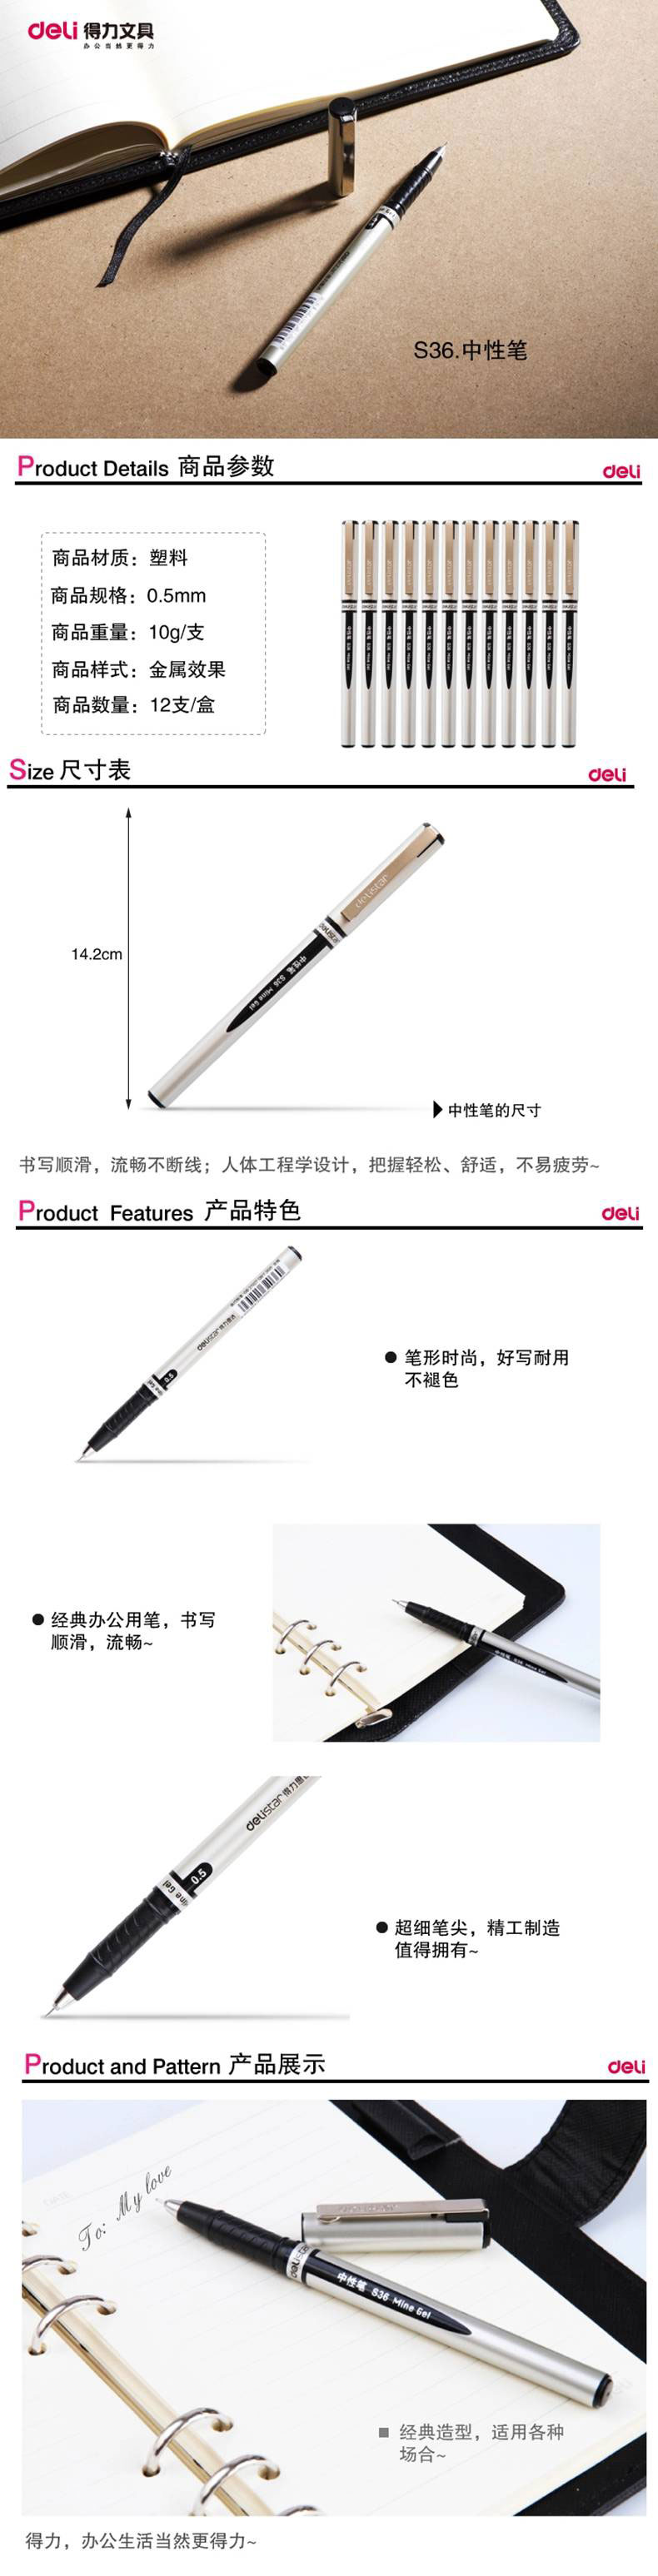 Deli/得力思达S36中性笔 0.5mm金属质感碳素笔 办公签字笔 水性笔